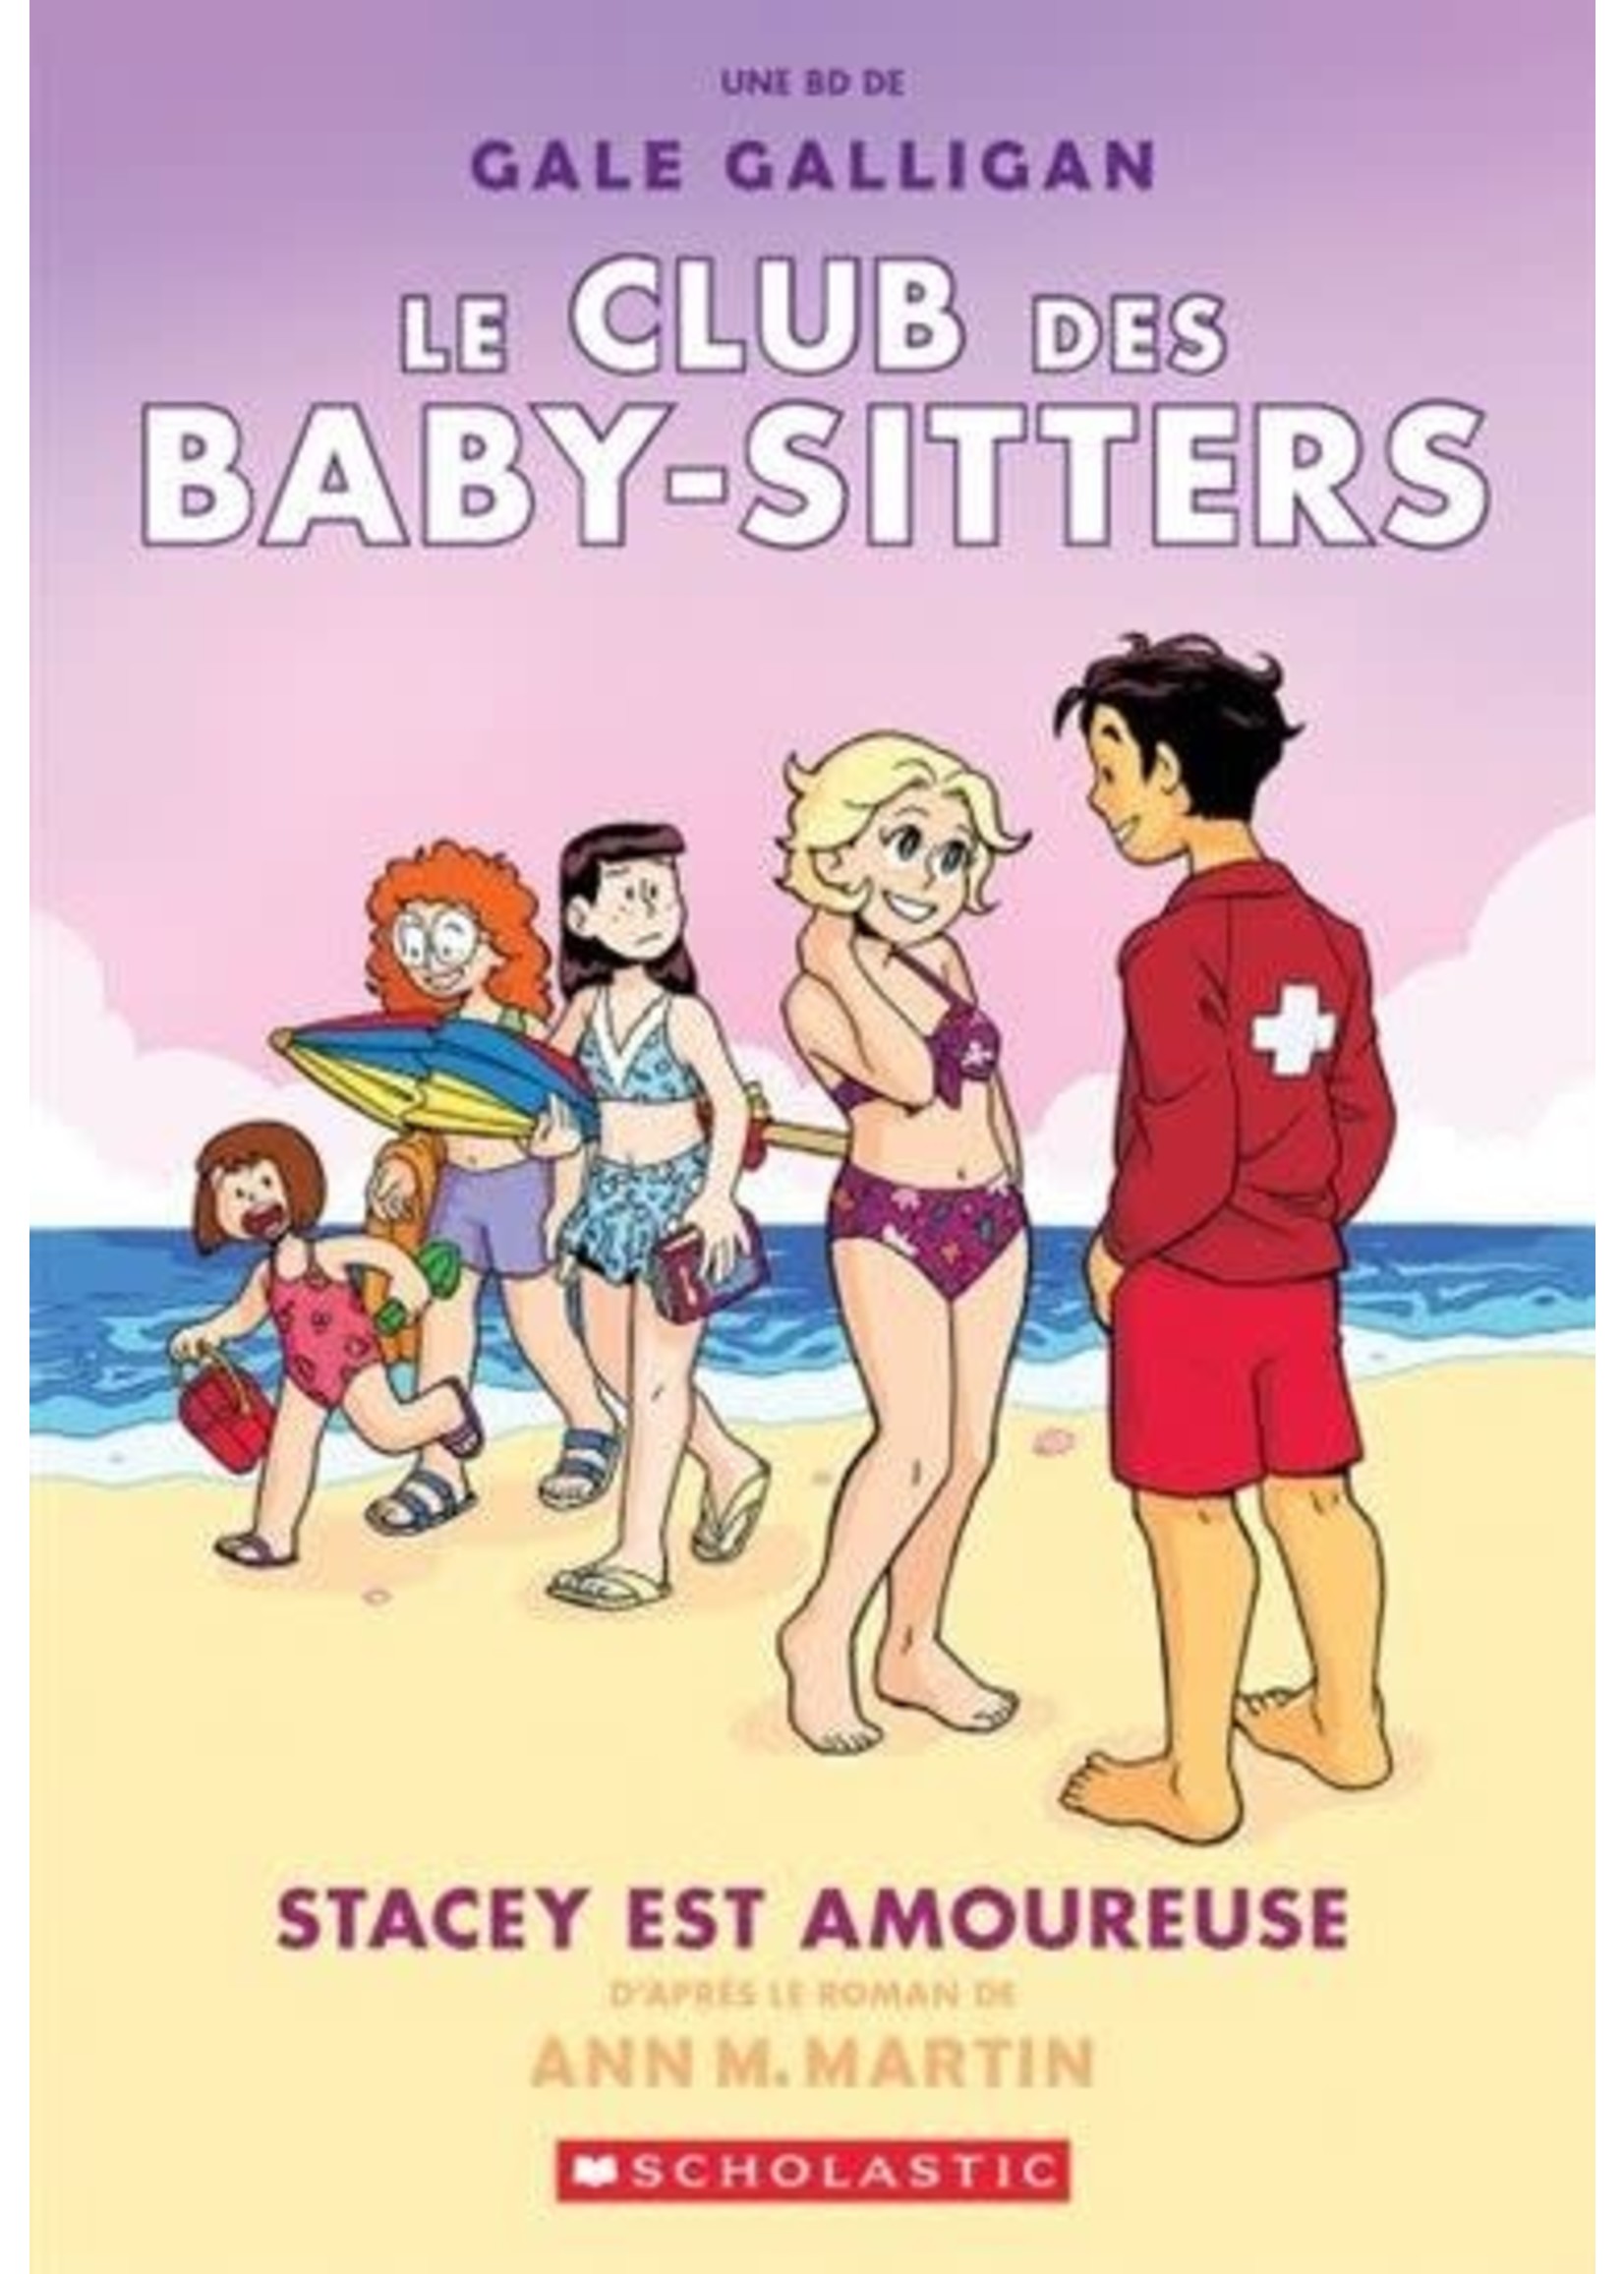 Stacey est amoureuse (Club des baby-sitters #07) De Ann M Martin, Gale Galligan